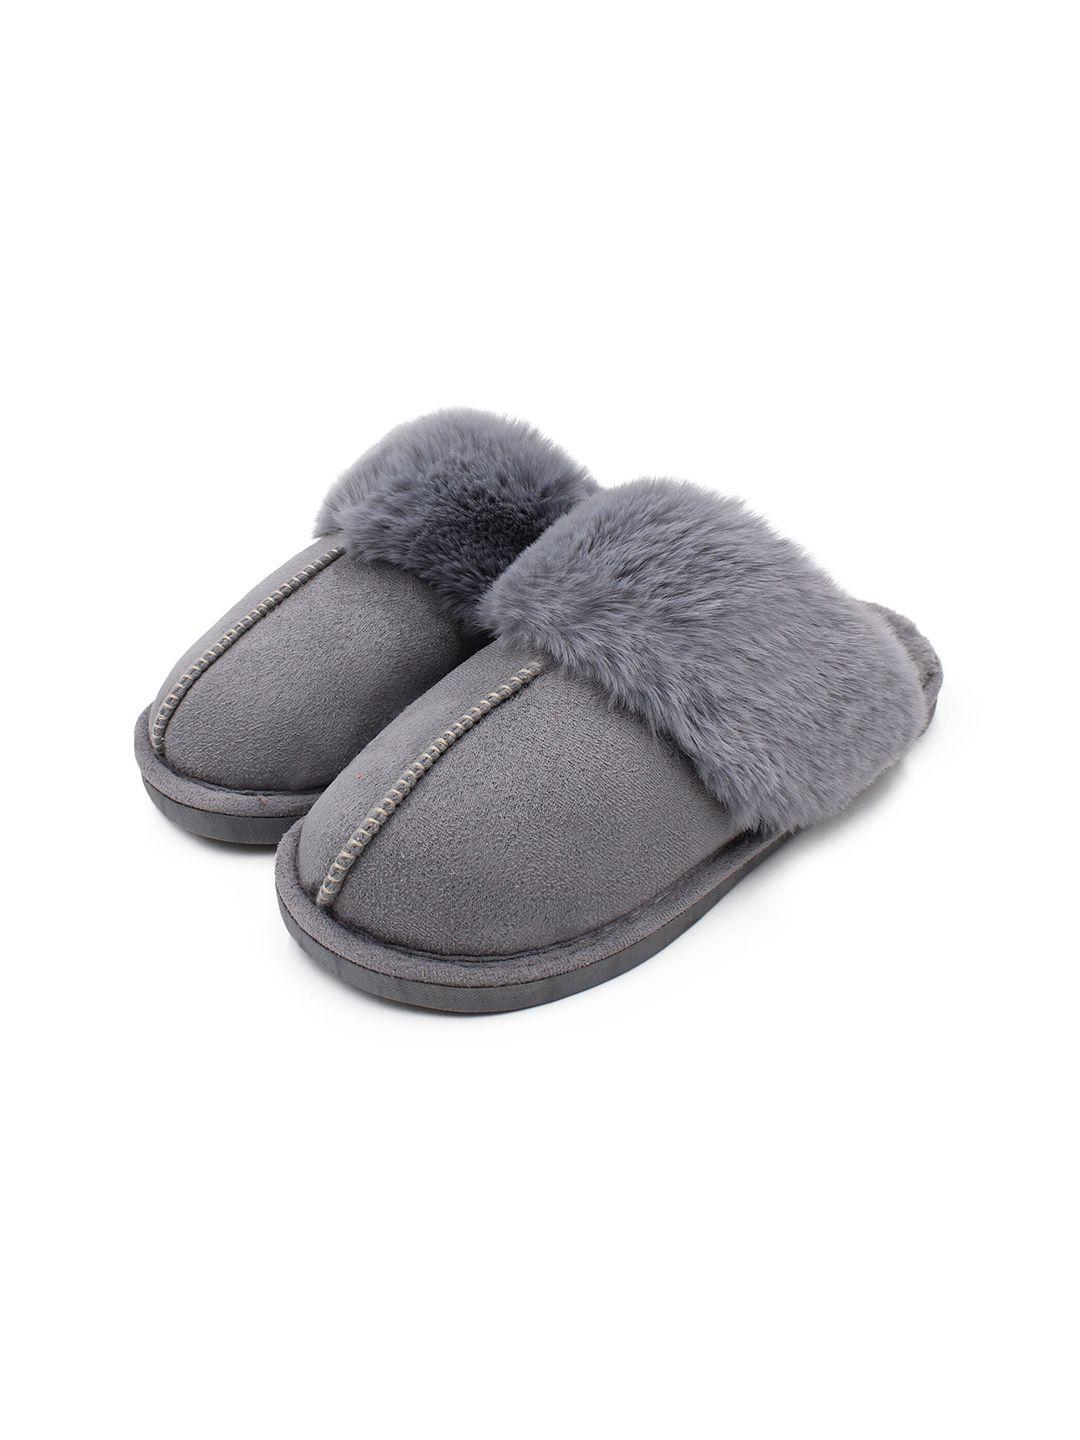 jenna women self design warm fur room slippers